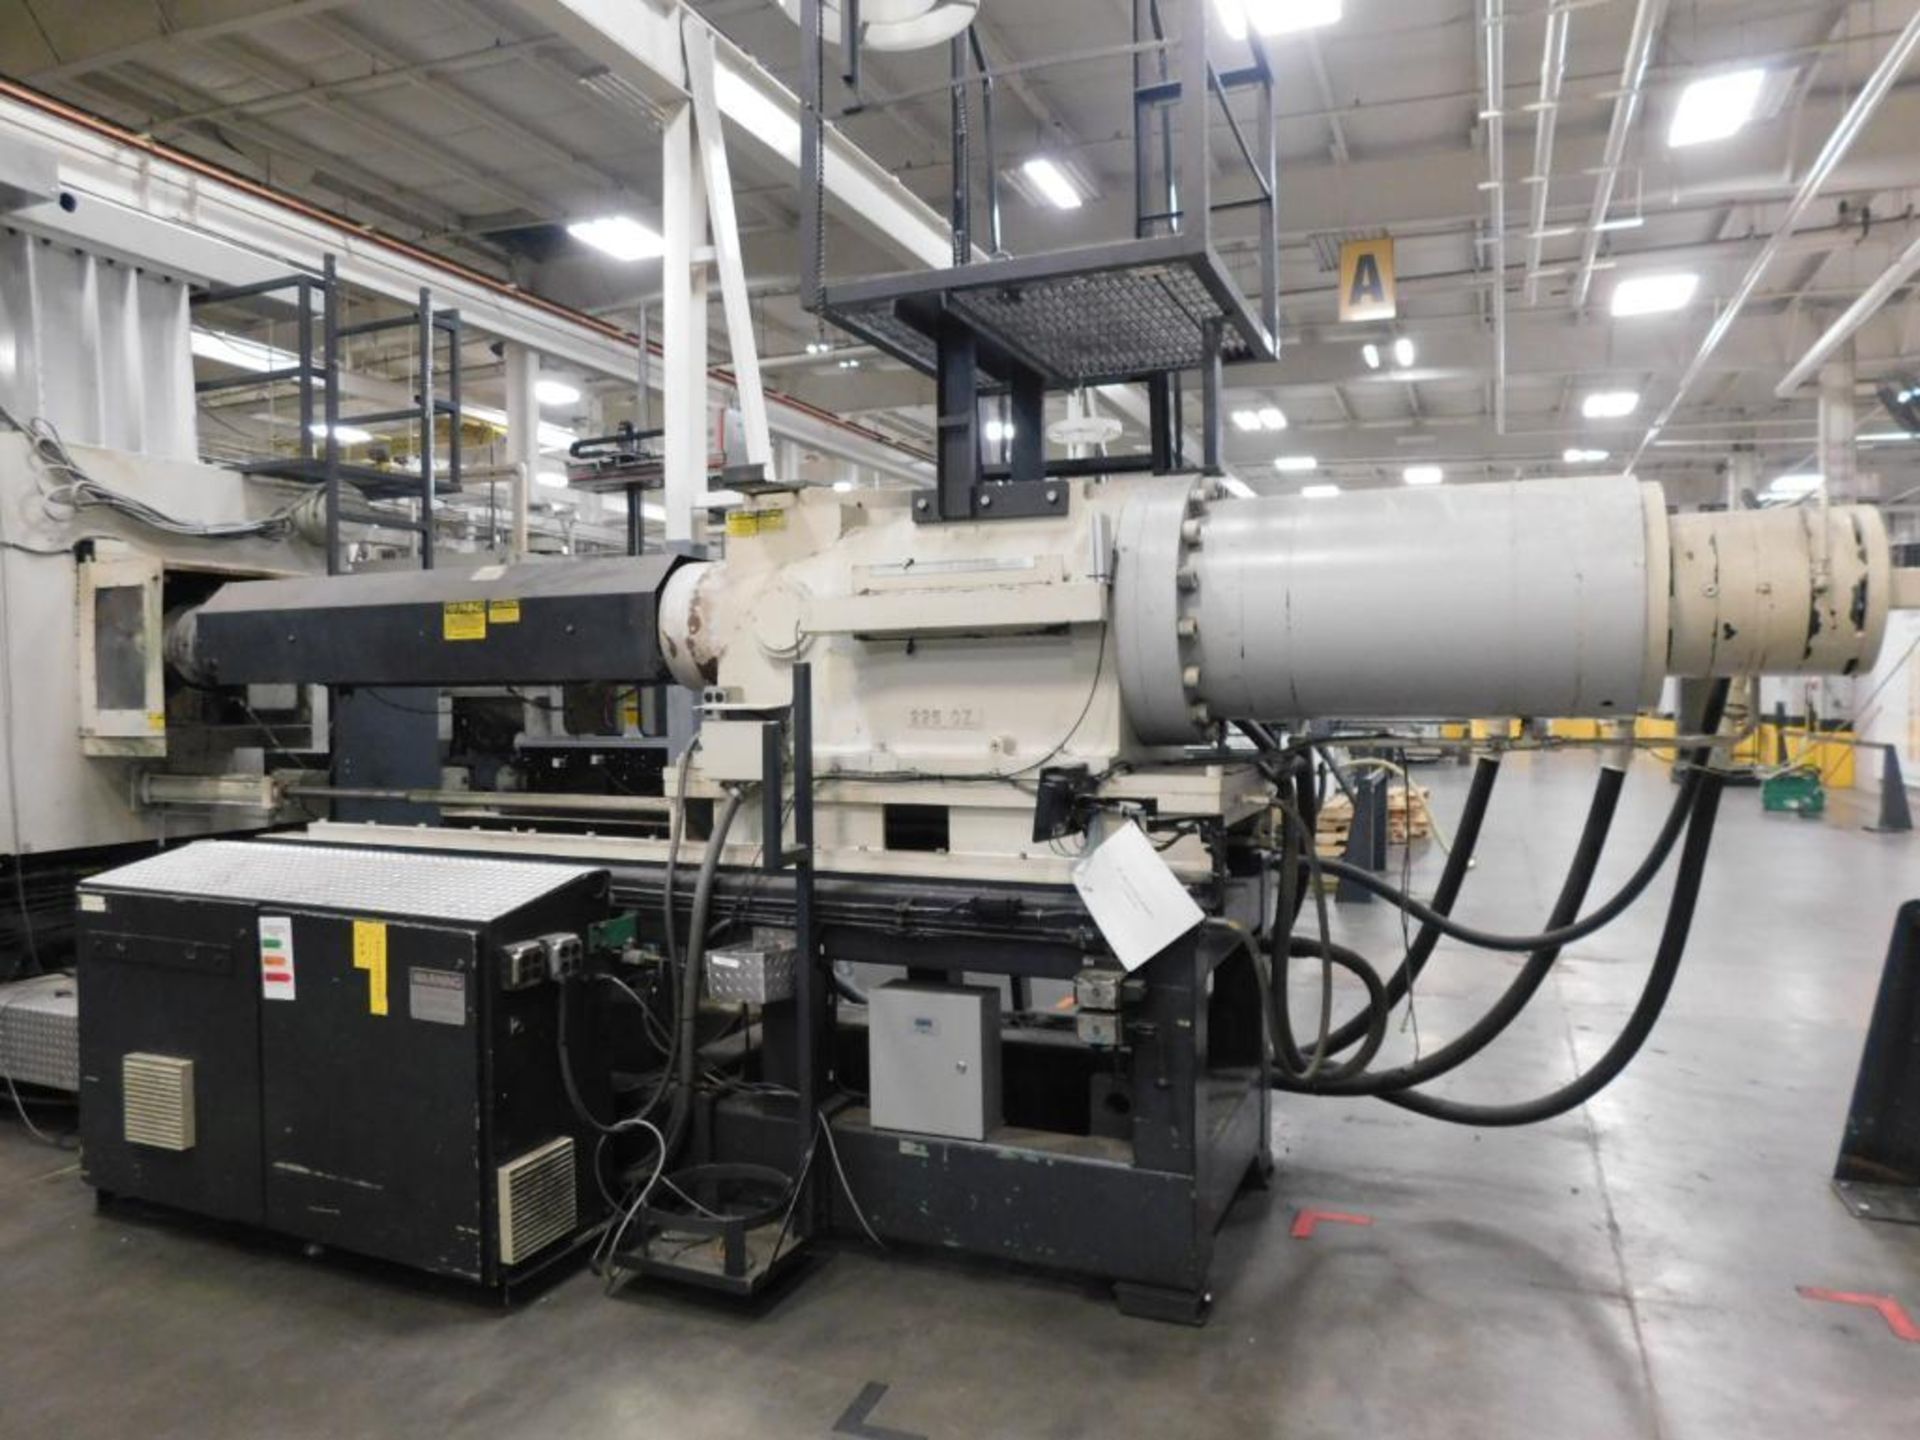 Cincinnati Milacron H1000-225 W/P 1000-Ton Horizontal Injection Molding Machine, S/N 3961A01/83-3 (A - Image 5 of 14